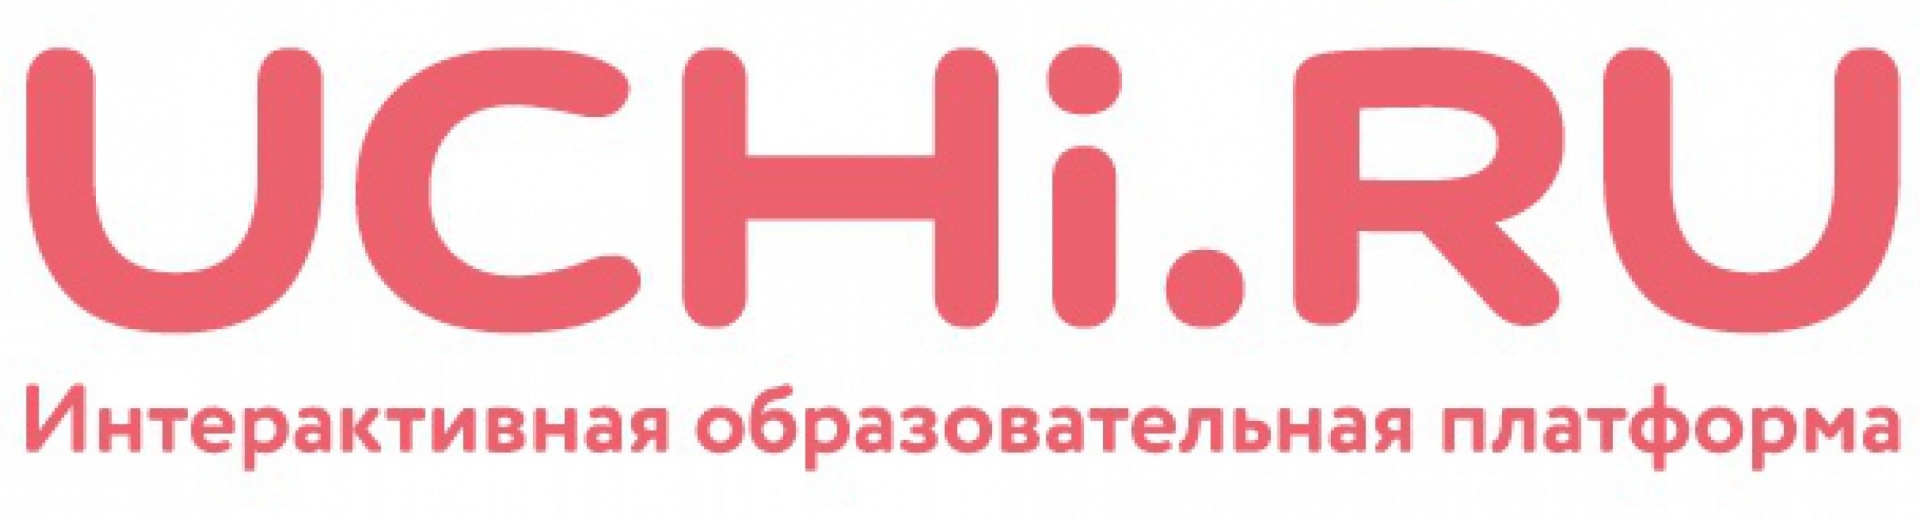 Https ru files tm. Учи ру. Учи ру лого. Логотип сайта учи ру. Логотип Uchi.ru.